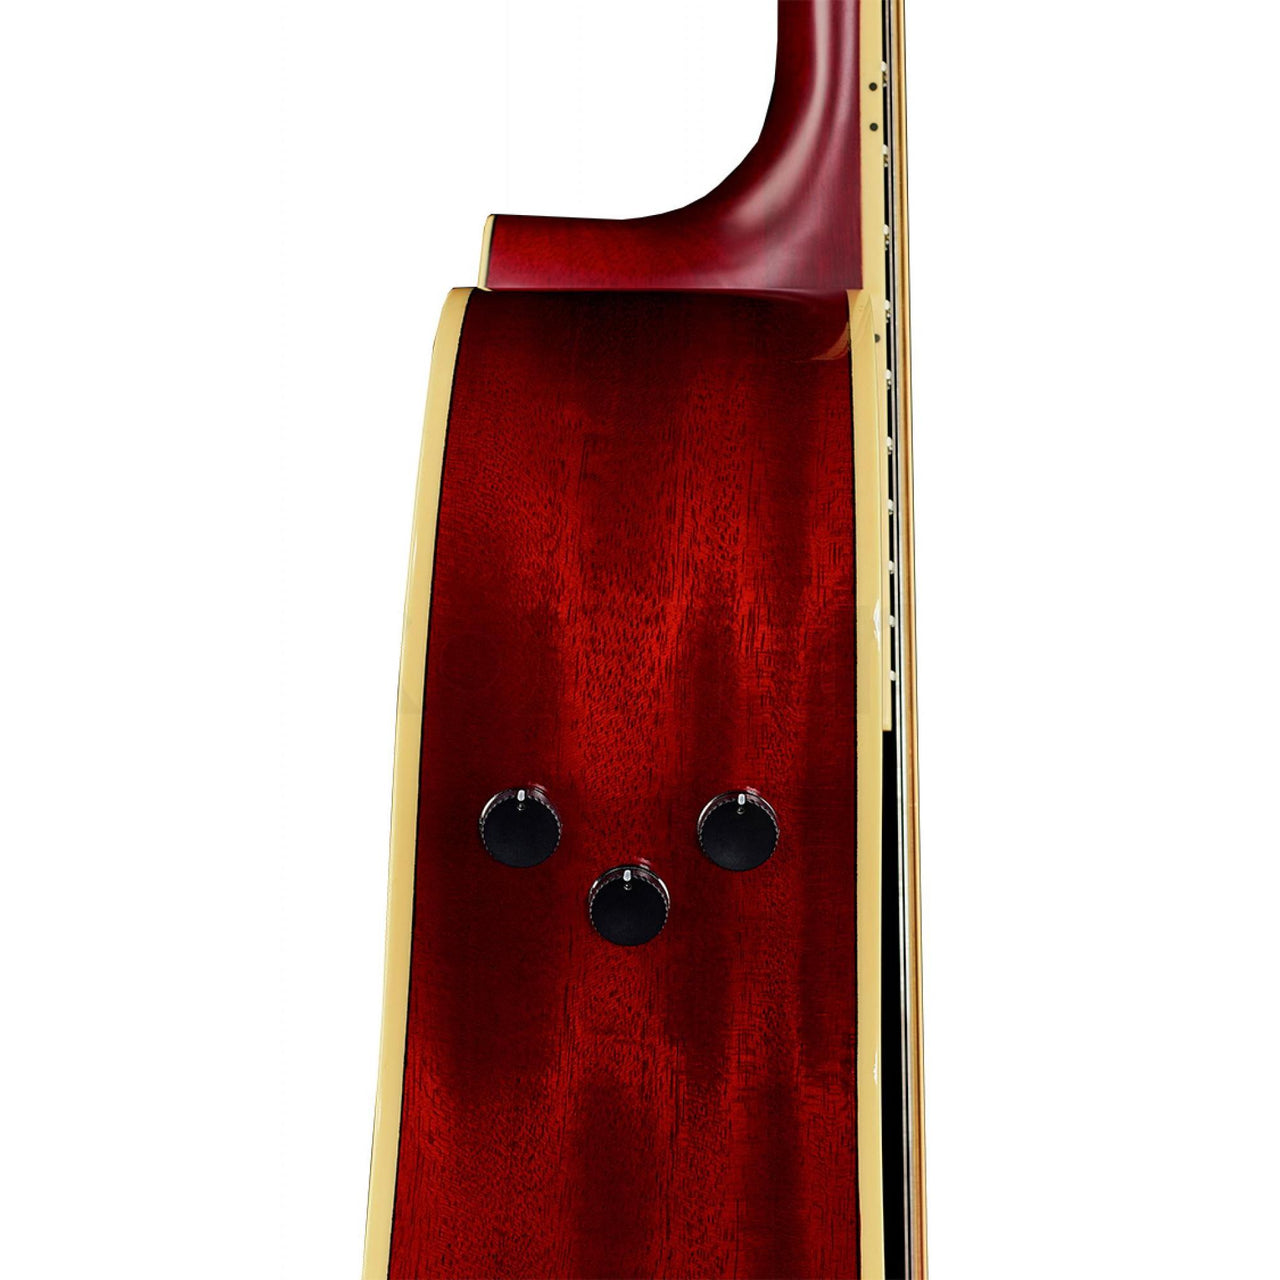 Guitarra Electroacustica Yamaha Transacoustic Ruby Red, Fsta